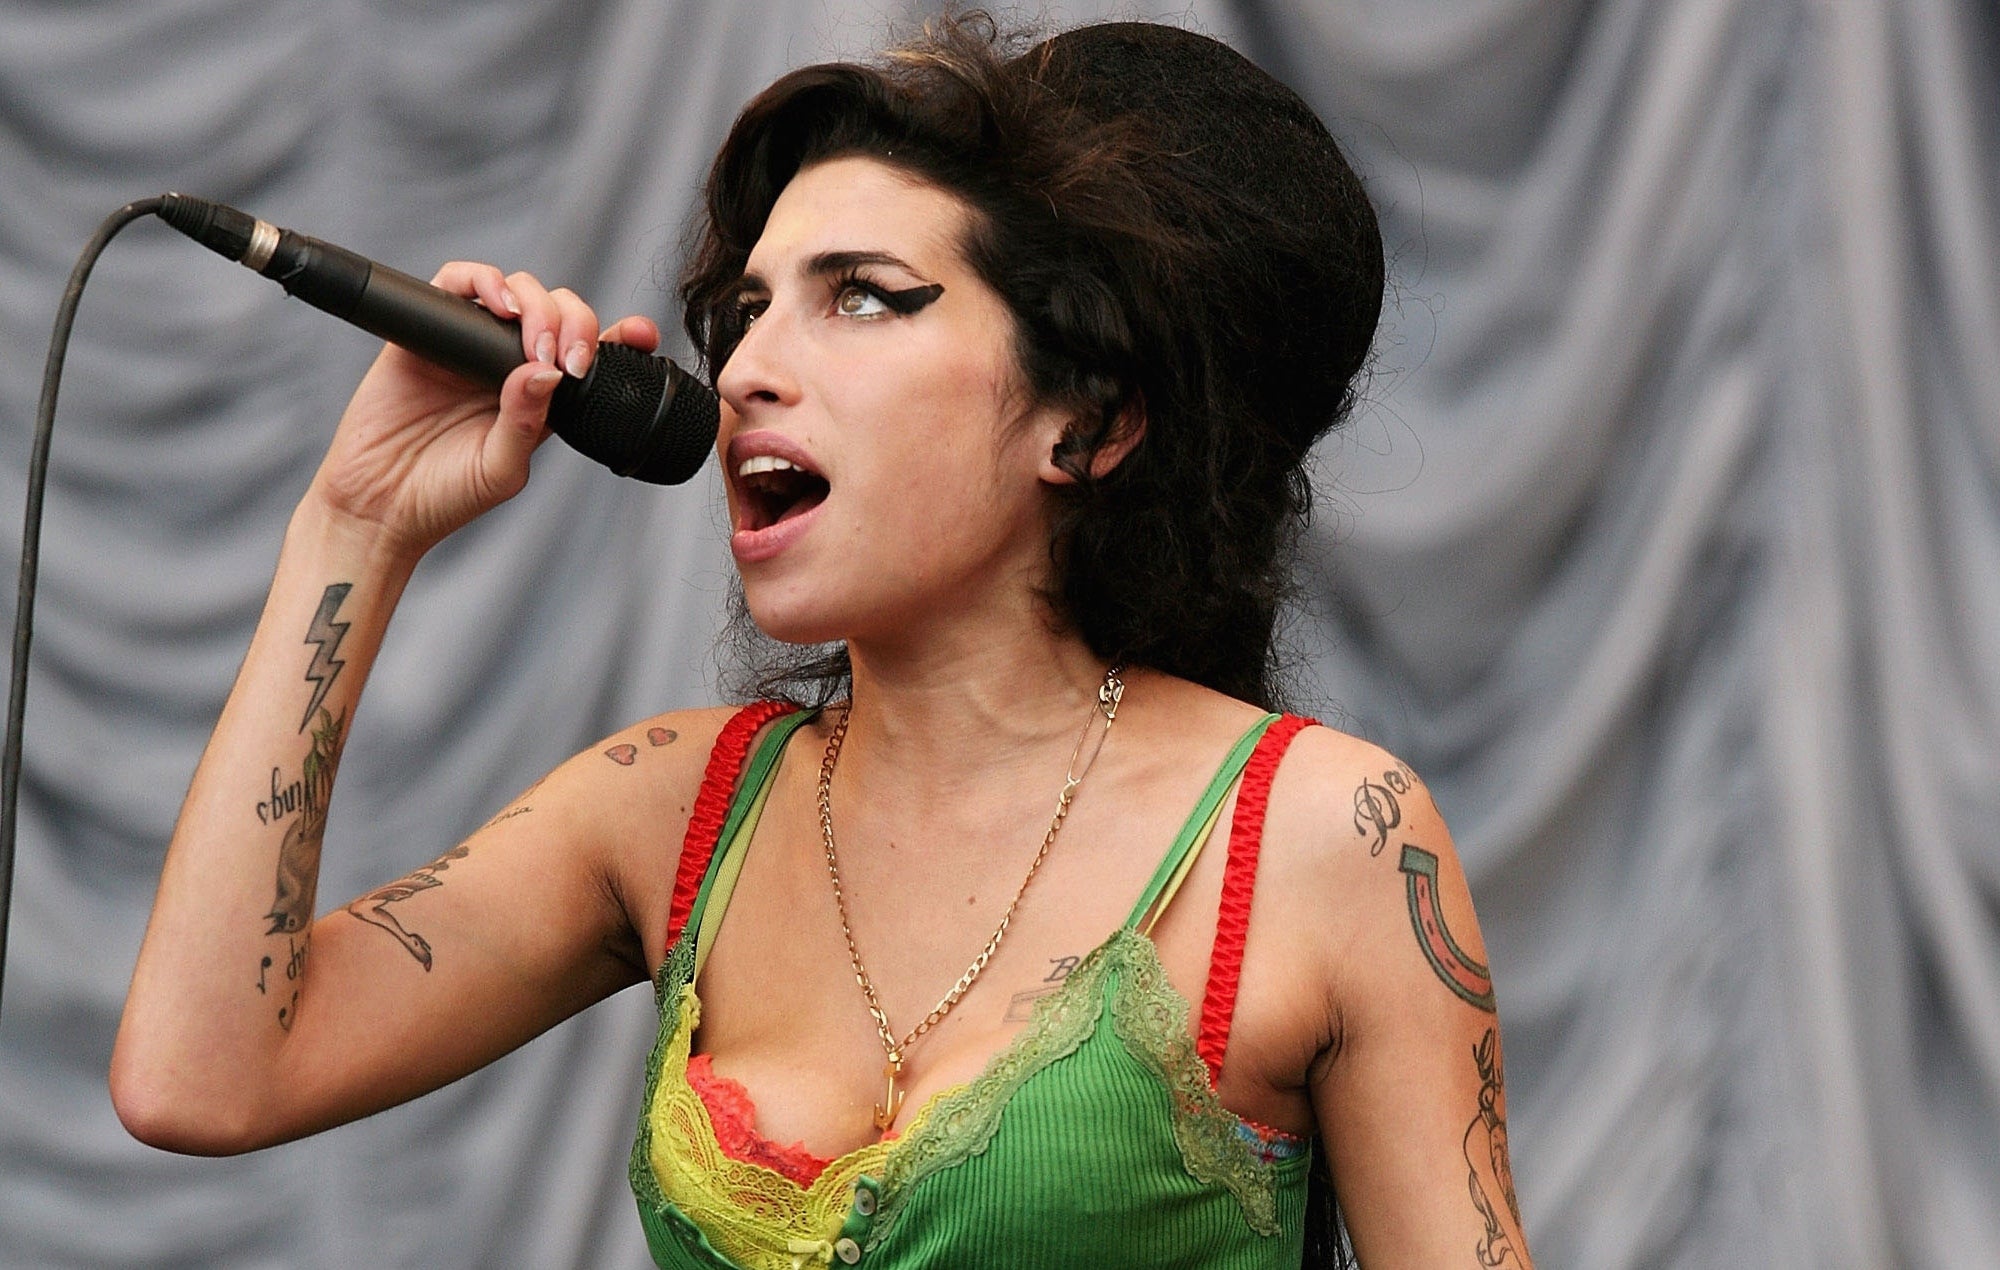 Amy Winehouse Glastonbury 2007 Performance To Be Released on Vinyl